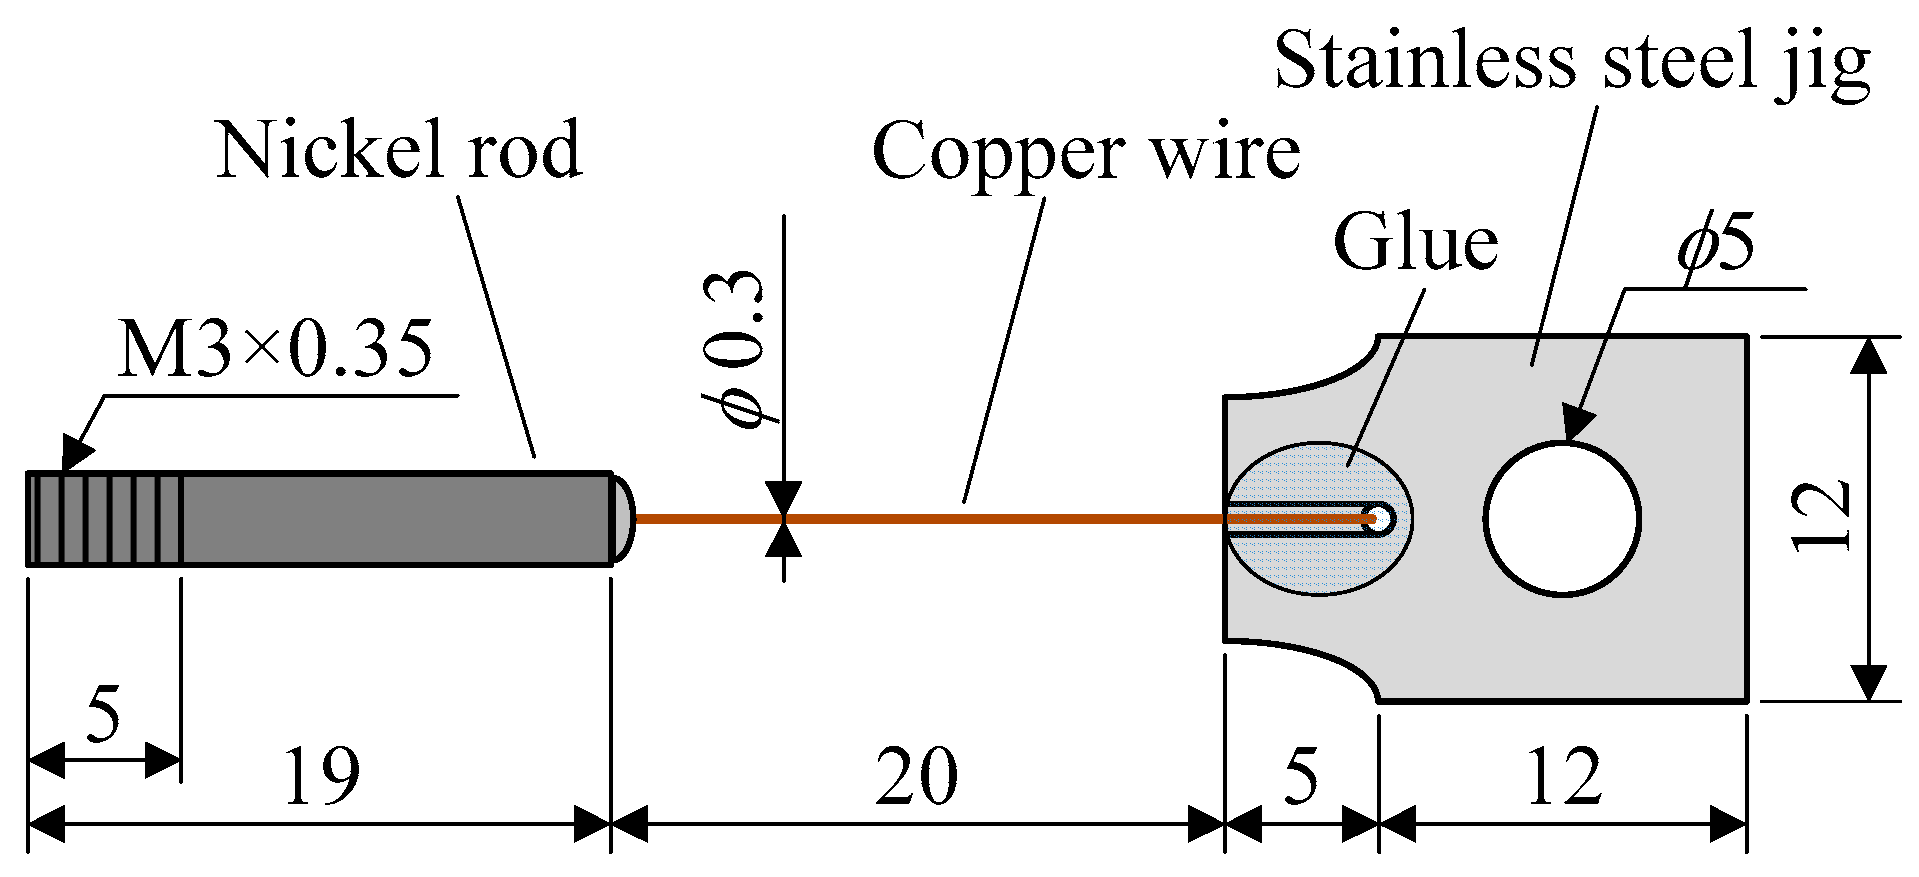 Superior Conductivity Pure Copper Wire High Ductile Strength